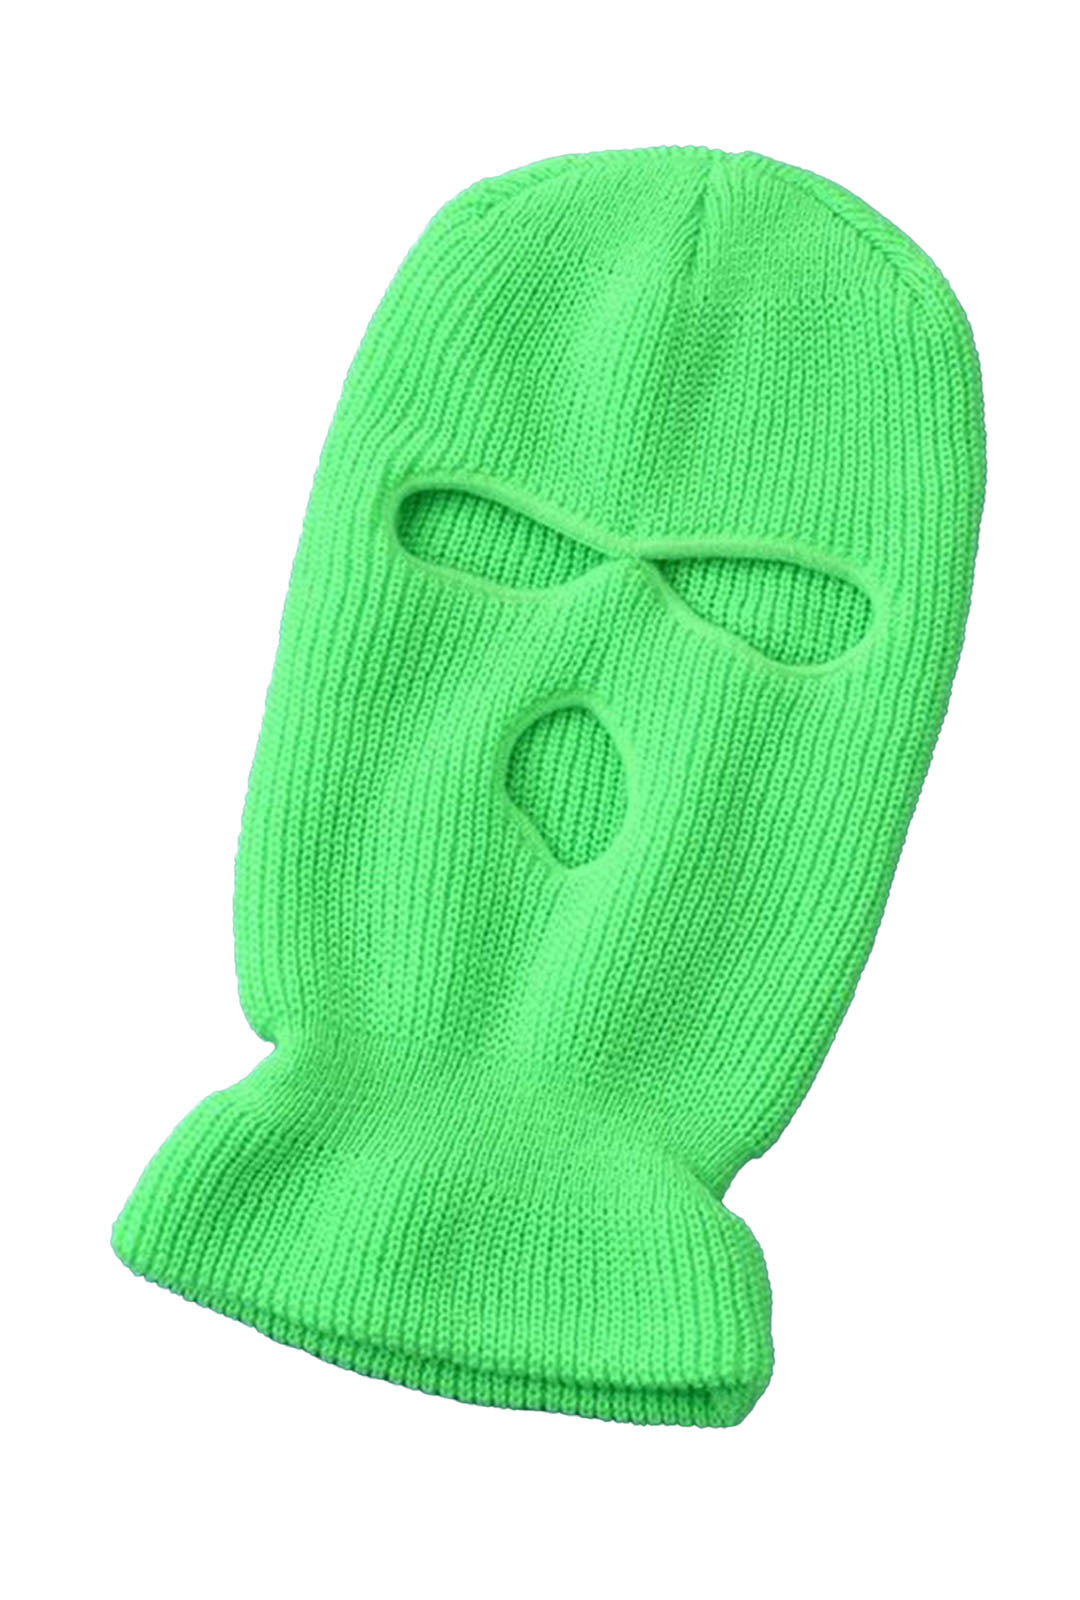 Neon Green Balaclava Mask Perth | Hurly-Burly